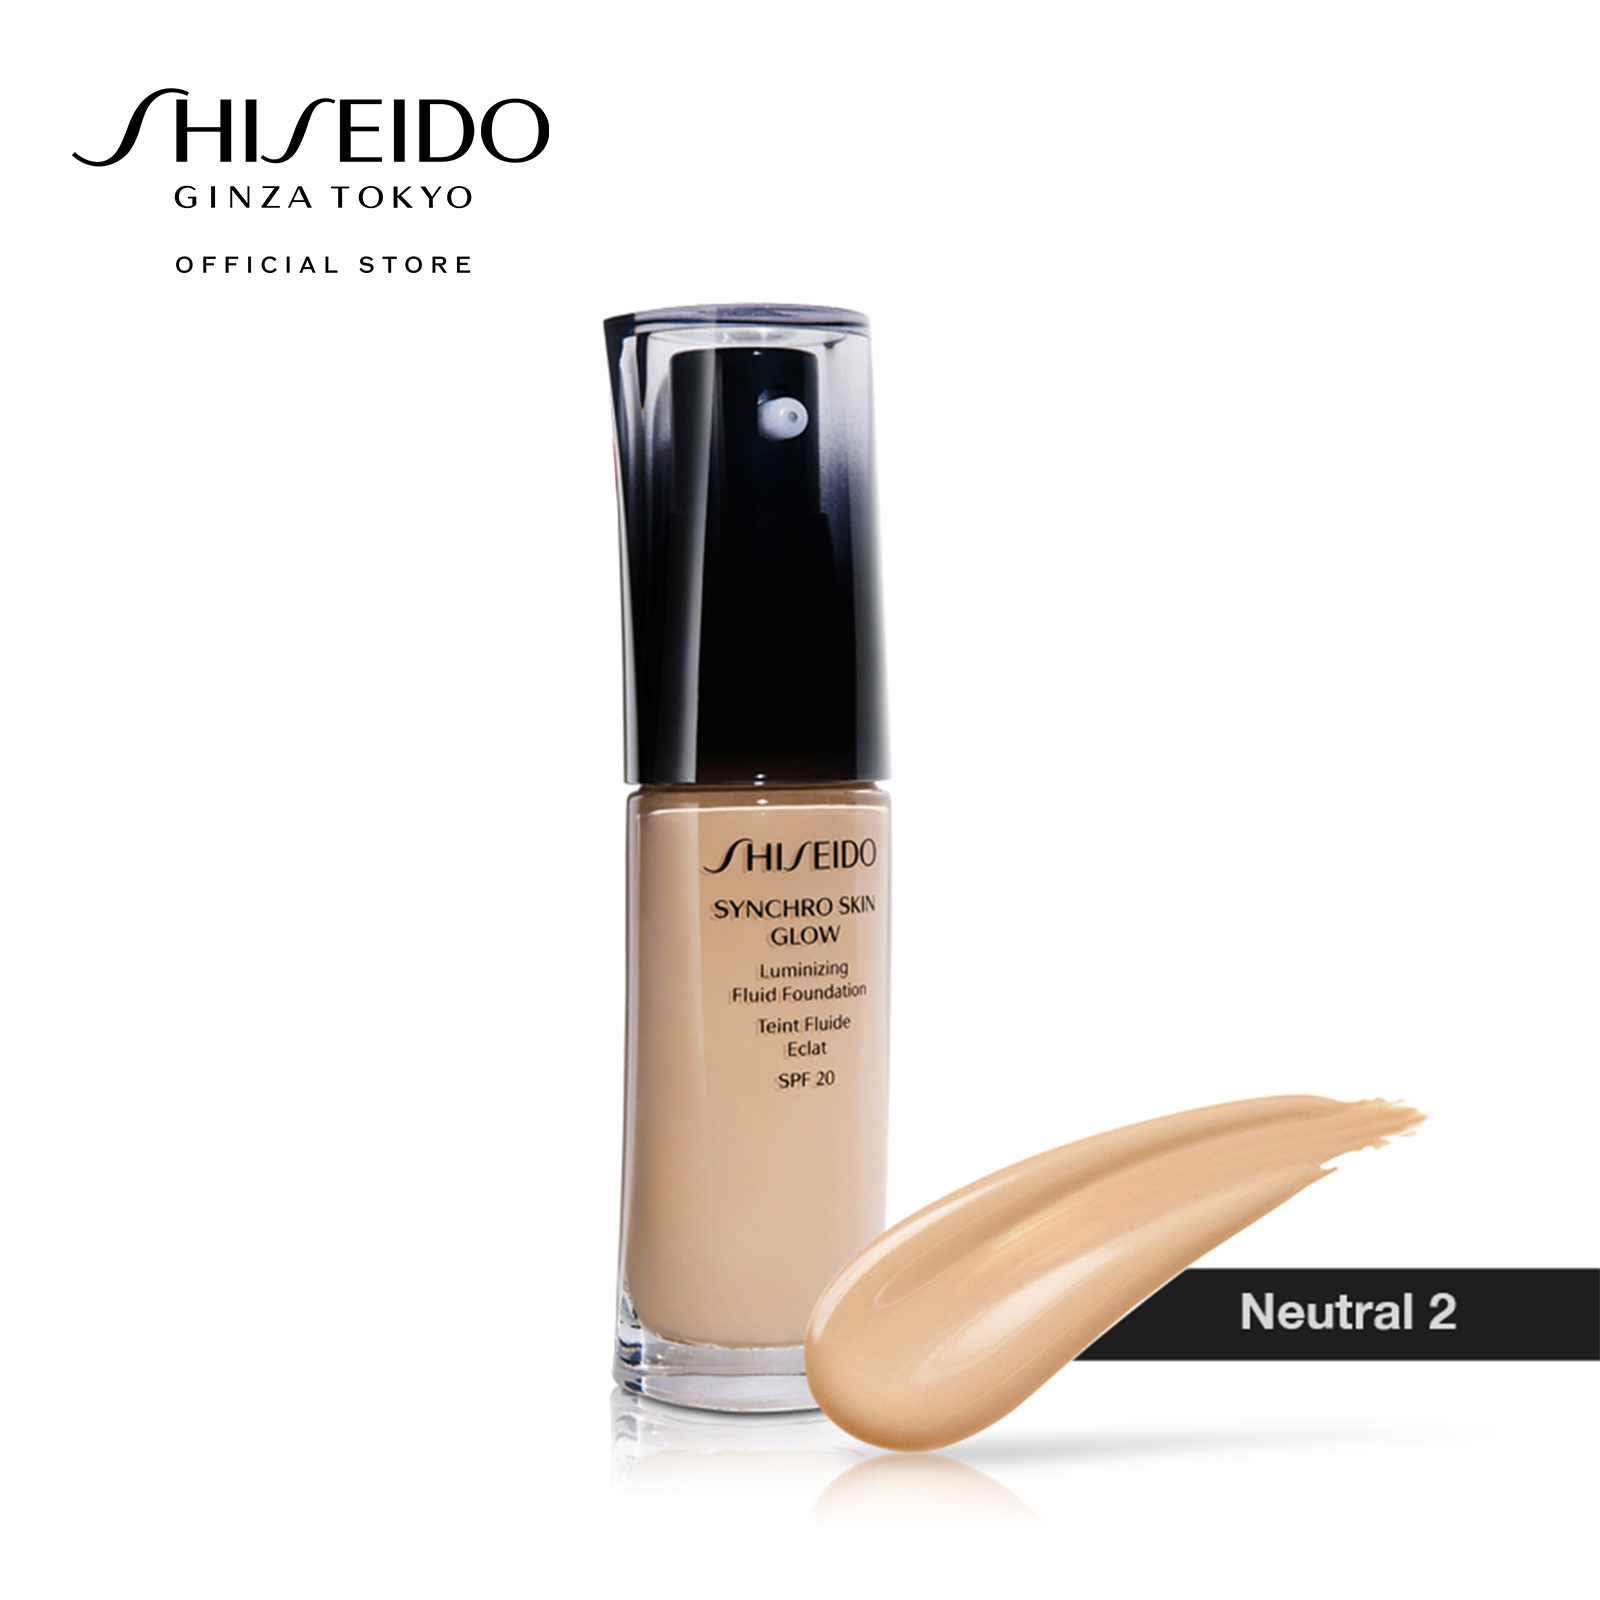 Shiseido флюид. Shiseido Synchro Skin Glow Luminizing Fluid. Shiseido Luminizing Fluid Foundation. Shiseido Synchro Skin Glow Luminizing Fluid Foundation Neutral 2. Тональный шисейдо Synchro Skin.